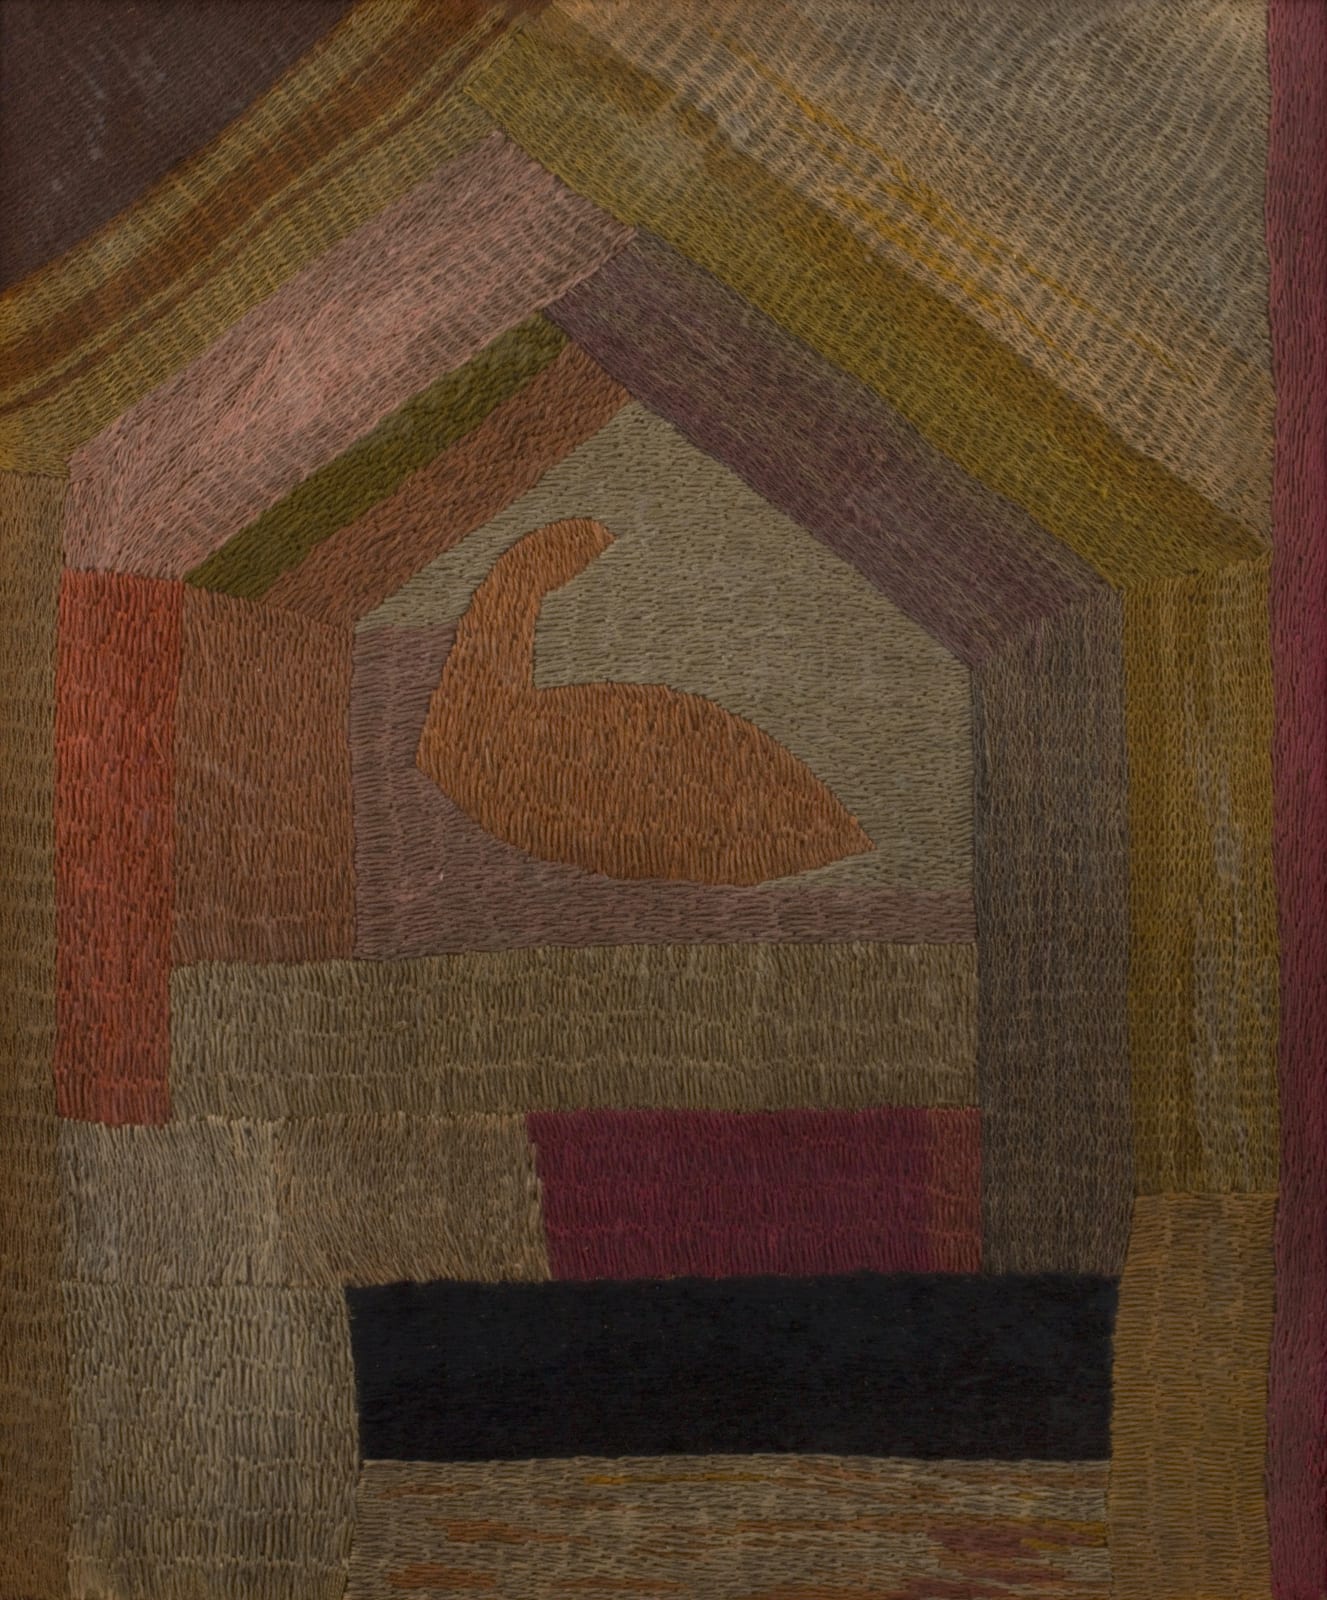 Duncan Grant, Embroidered firescreen, 1915-20